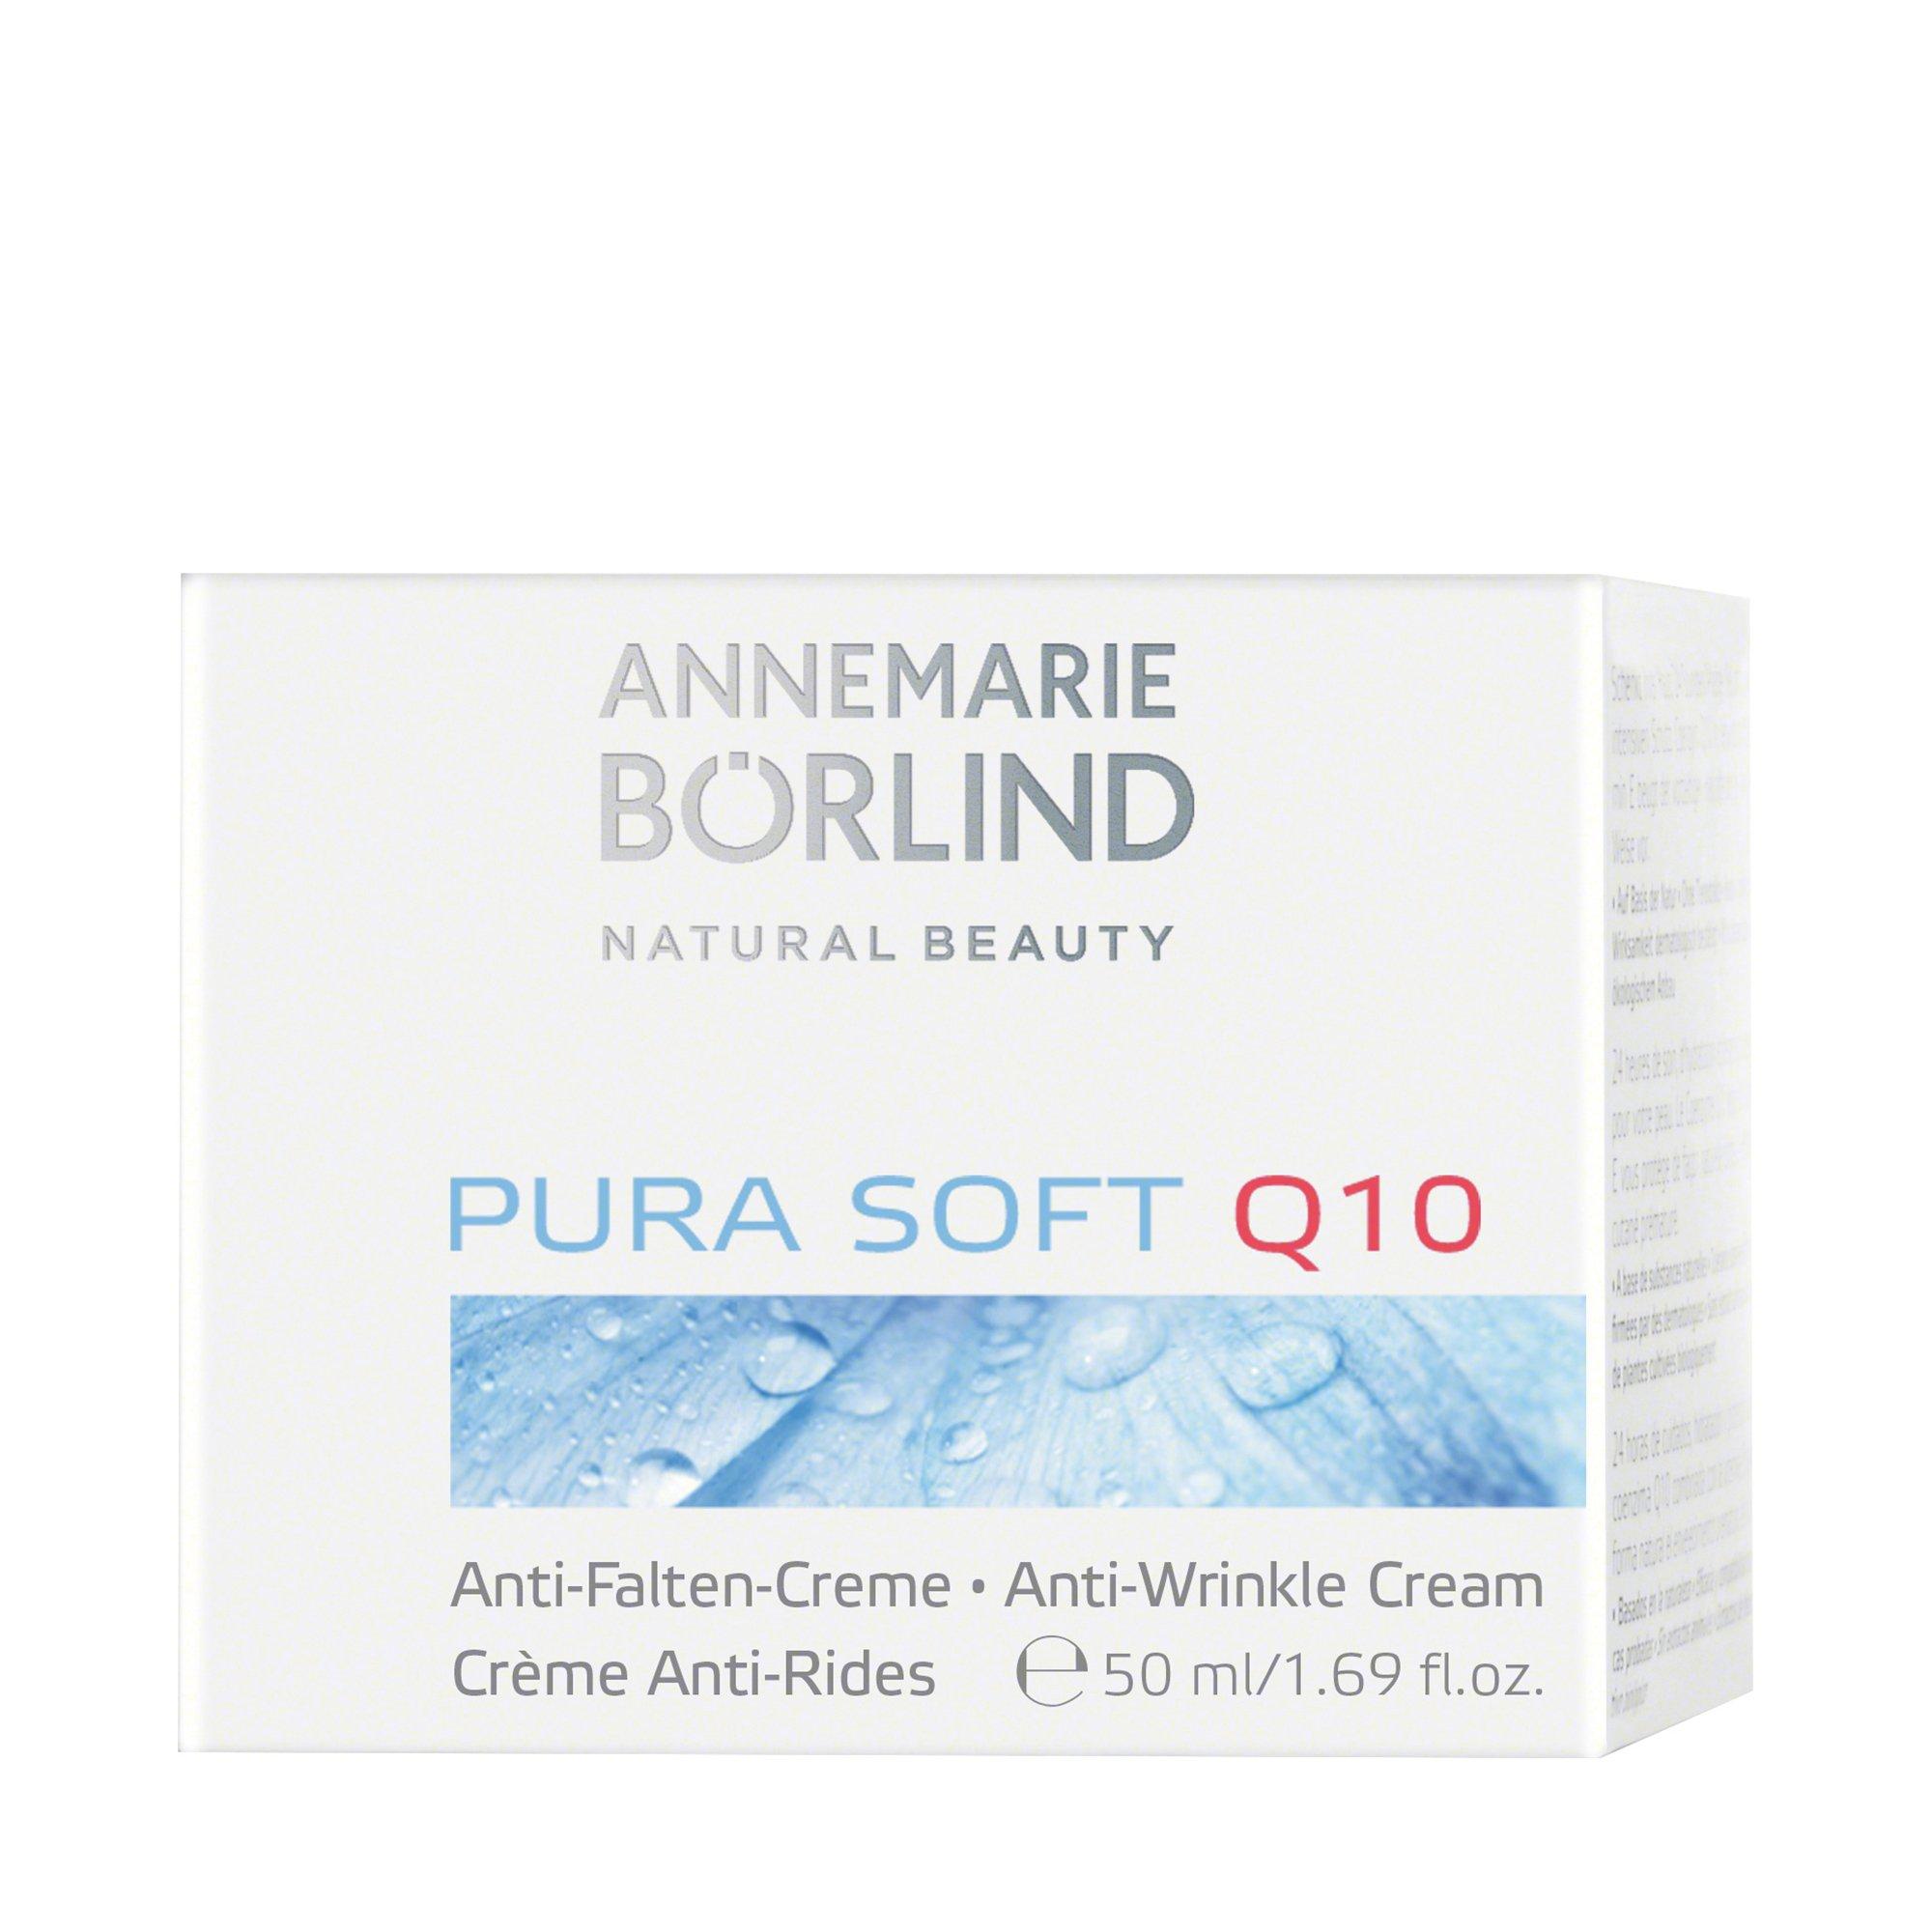 Annemarie Börlind Pura Soft Q10 Anti-Falten-Creme Pura Soft Q10 Crème Anti-Rides 